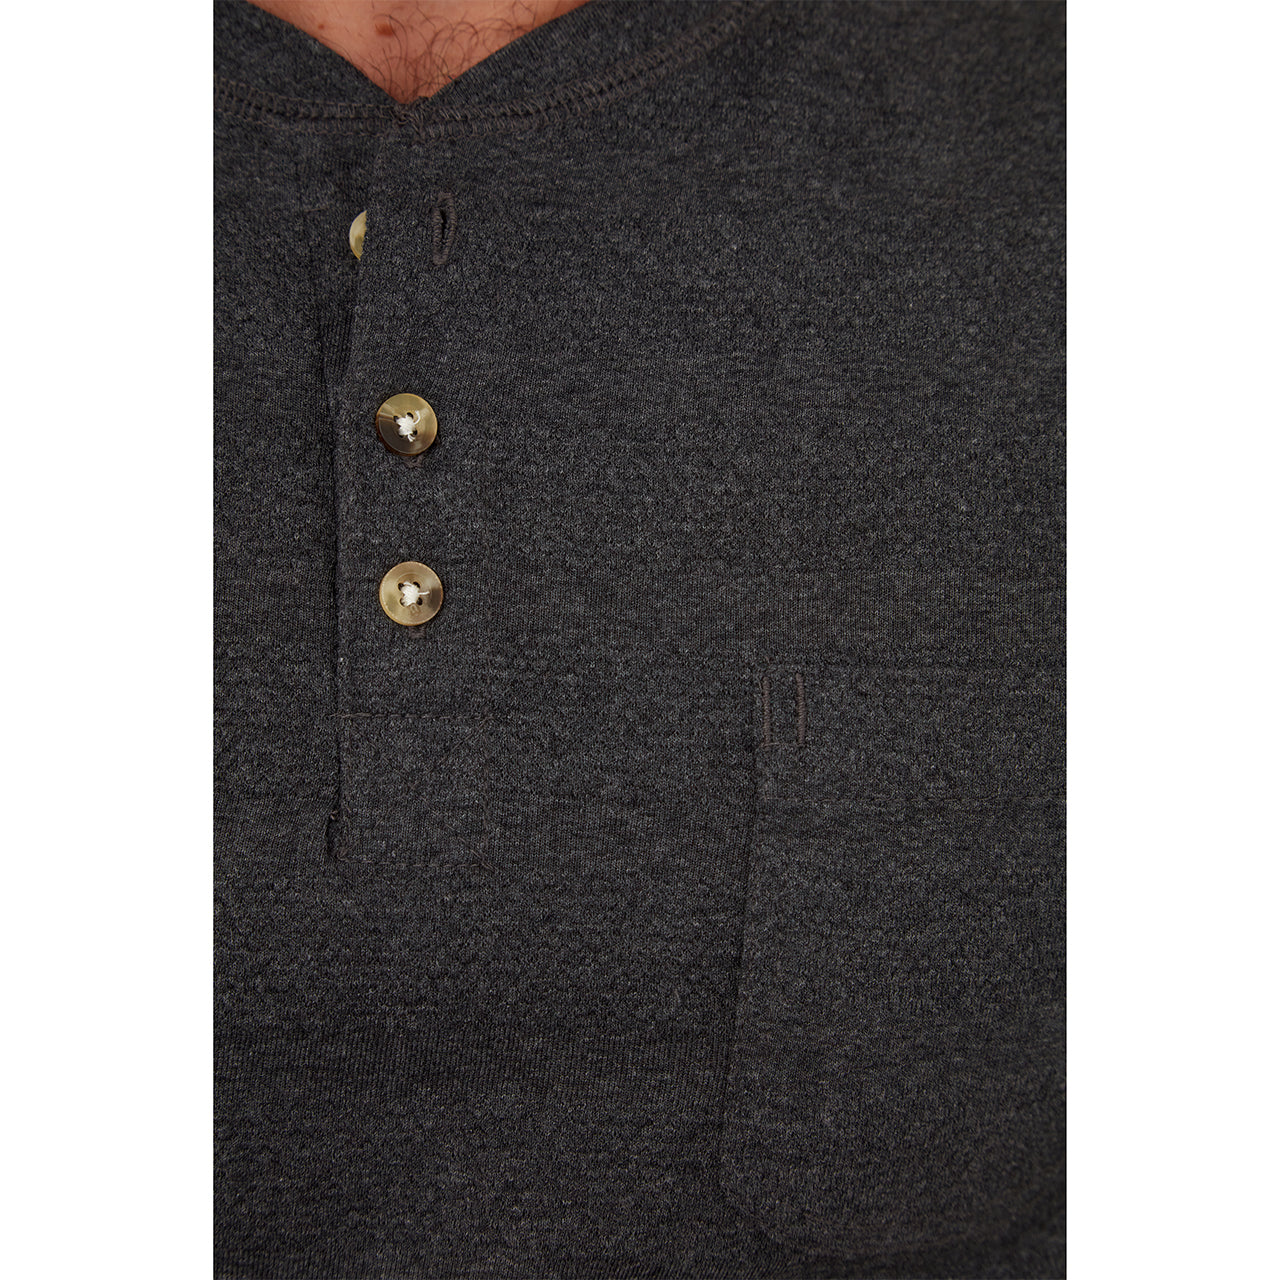 Charcoal Men's Long Sleeve Henley Shirt close up of buttons